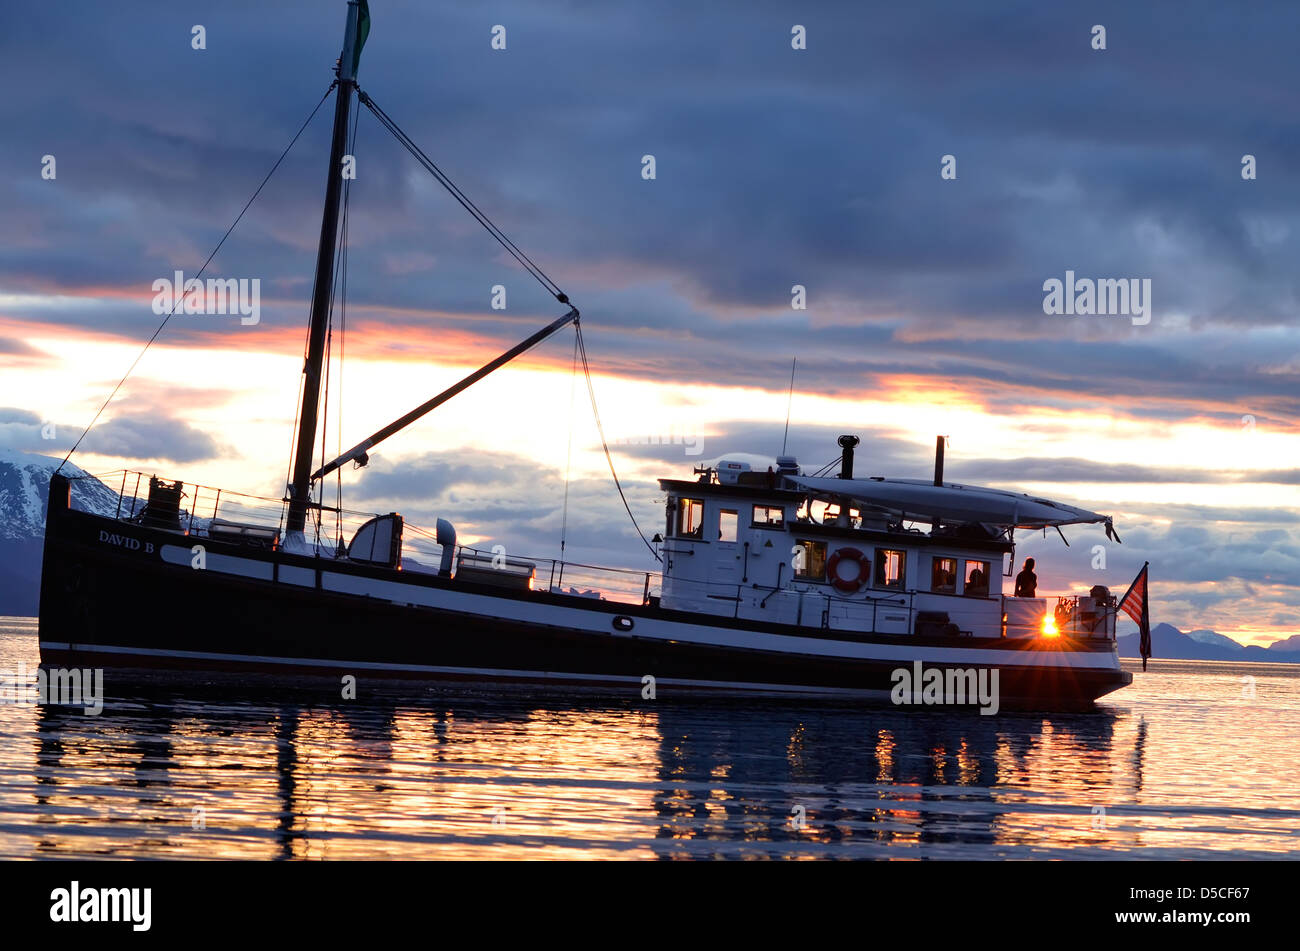 The David B, a restored boat used for cruising tours, Holkham Bay, Alaska. Stock Photo